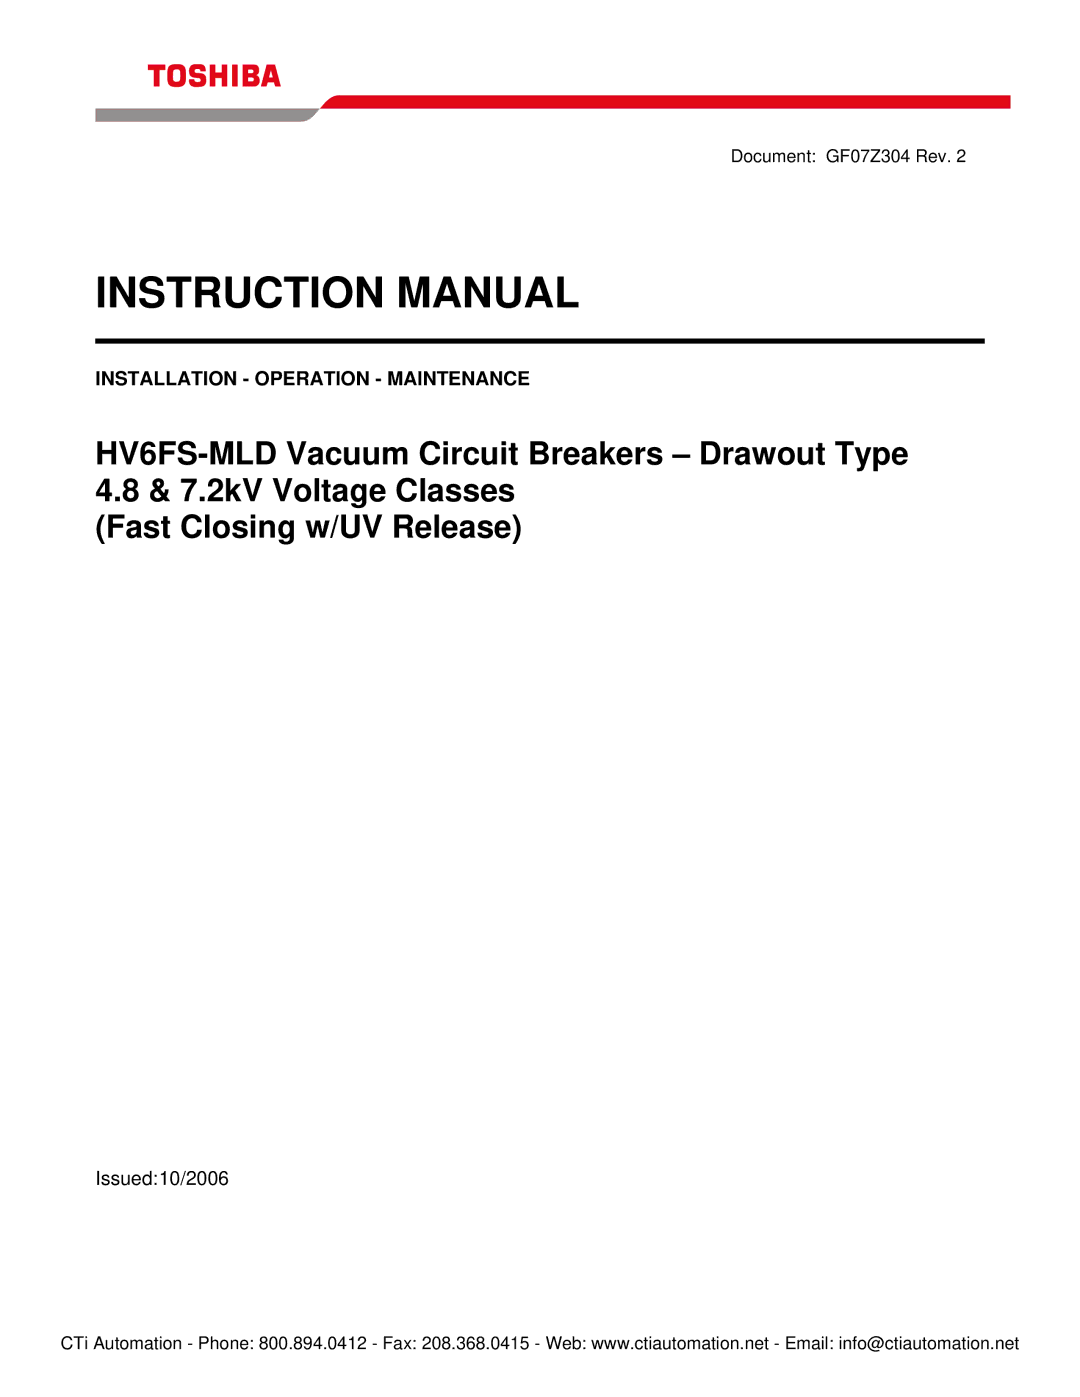 Toshiba HV6FS-MLD instruction manual Installation Operation Maintenance 